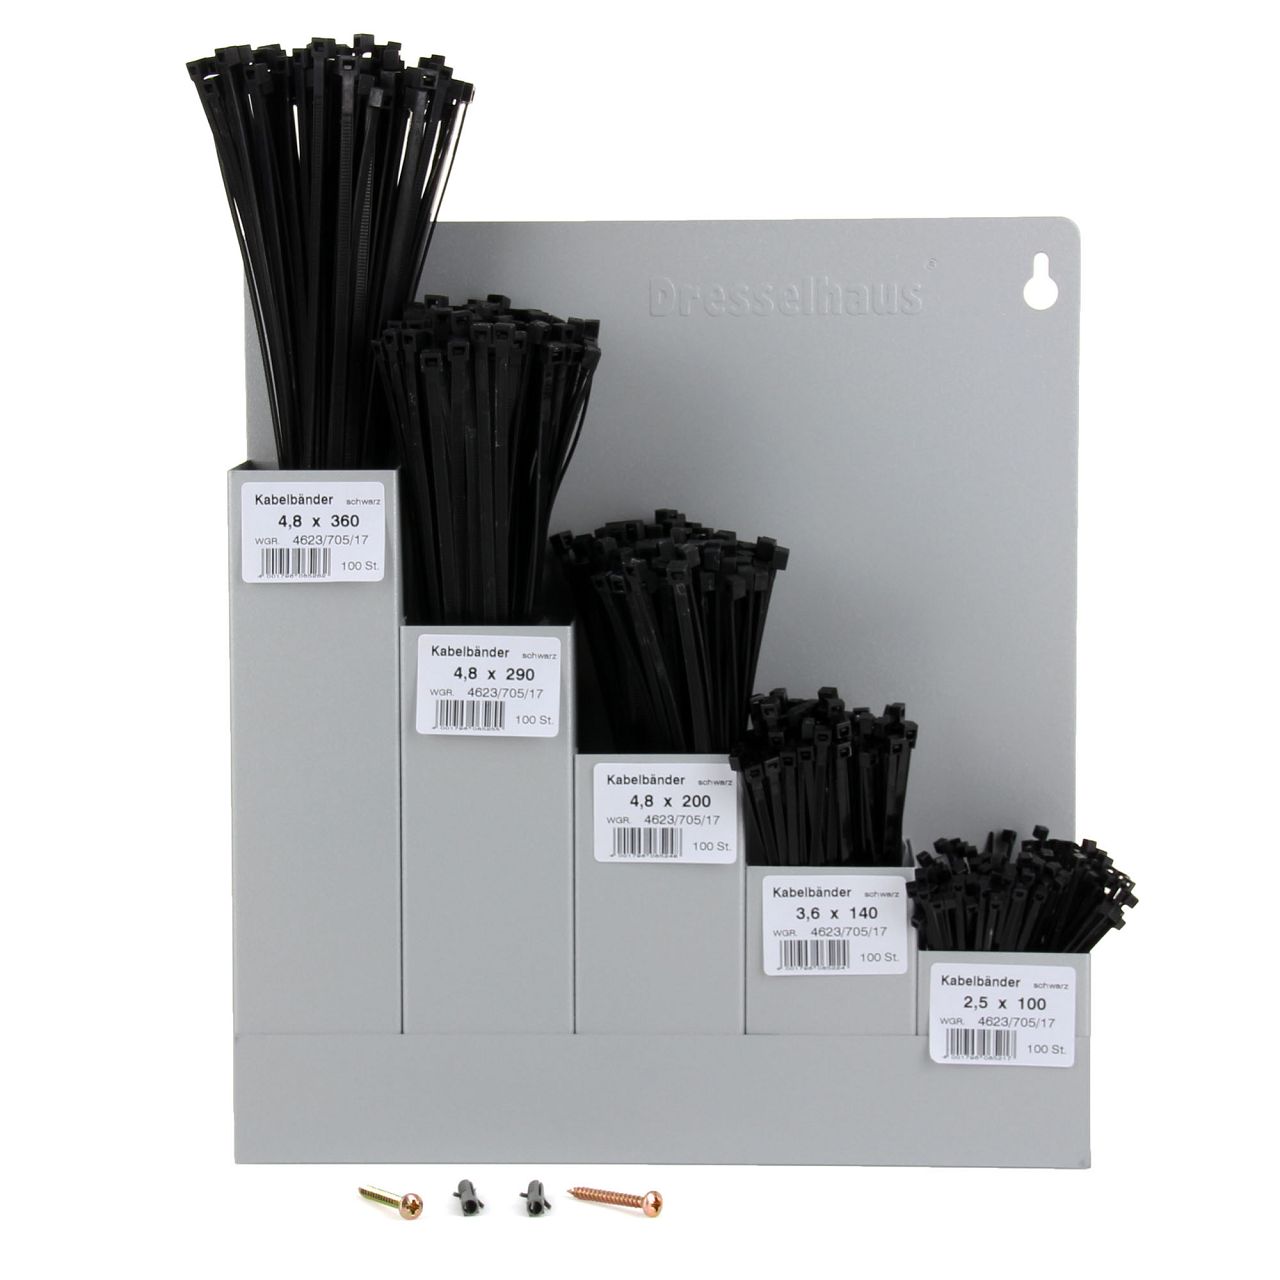 500x DRESSELHAUS Kabelbinder Kabelband Wandhalter Halter Sortiment Box gefüllt Set schwarz